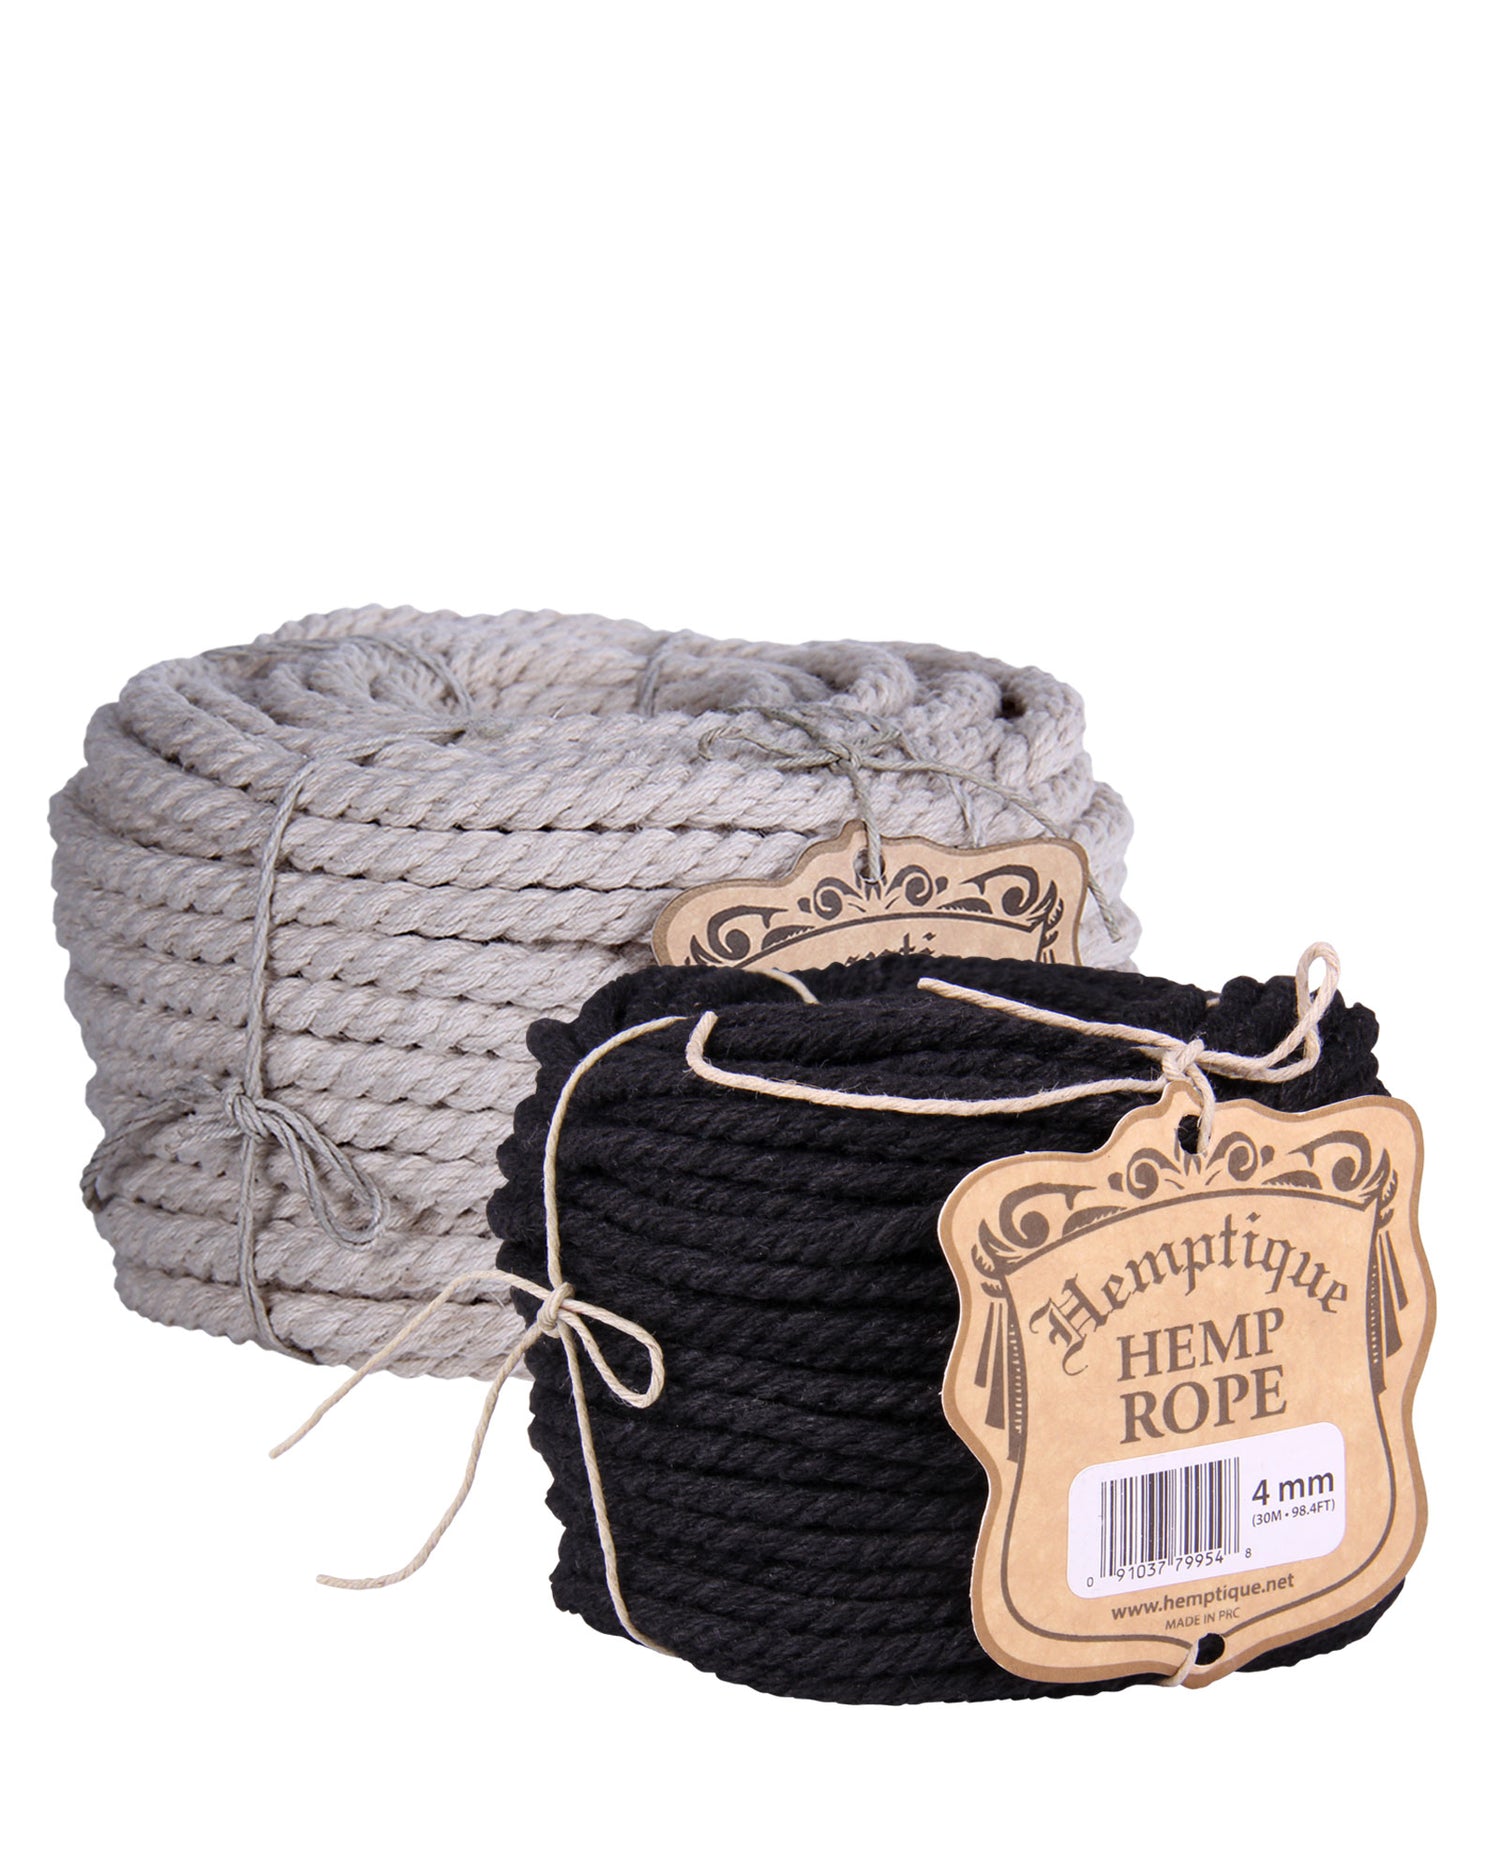 hemptique hemp rope coil